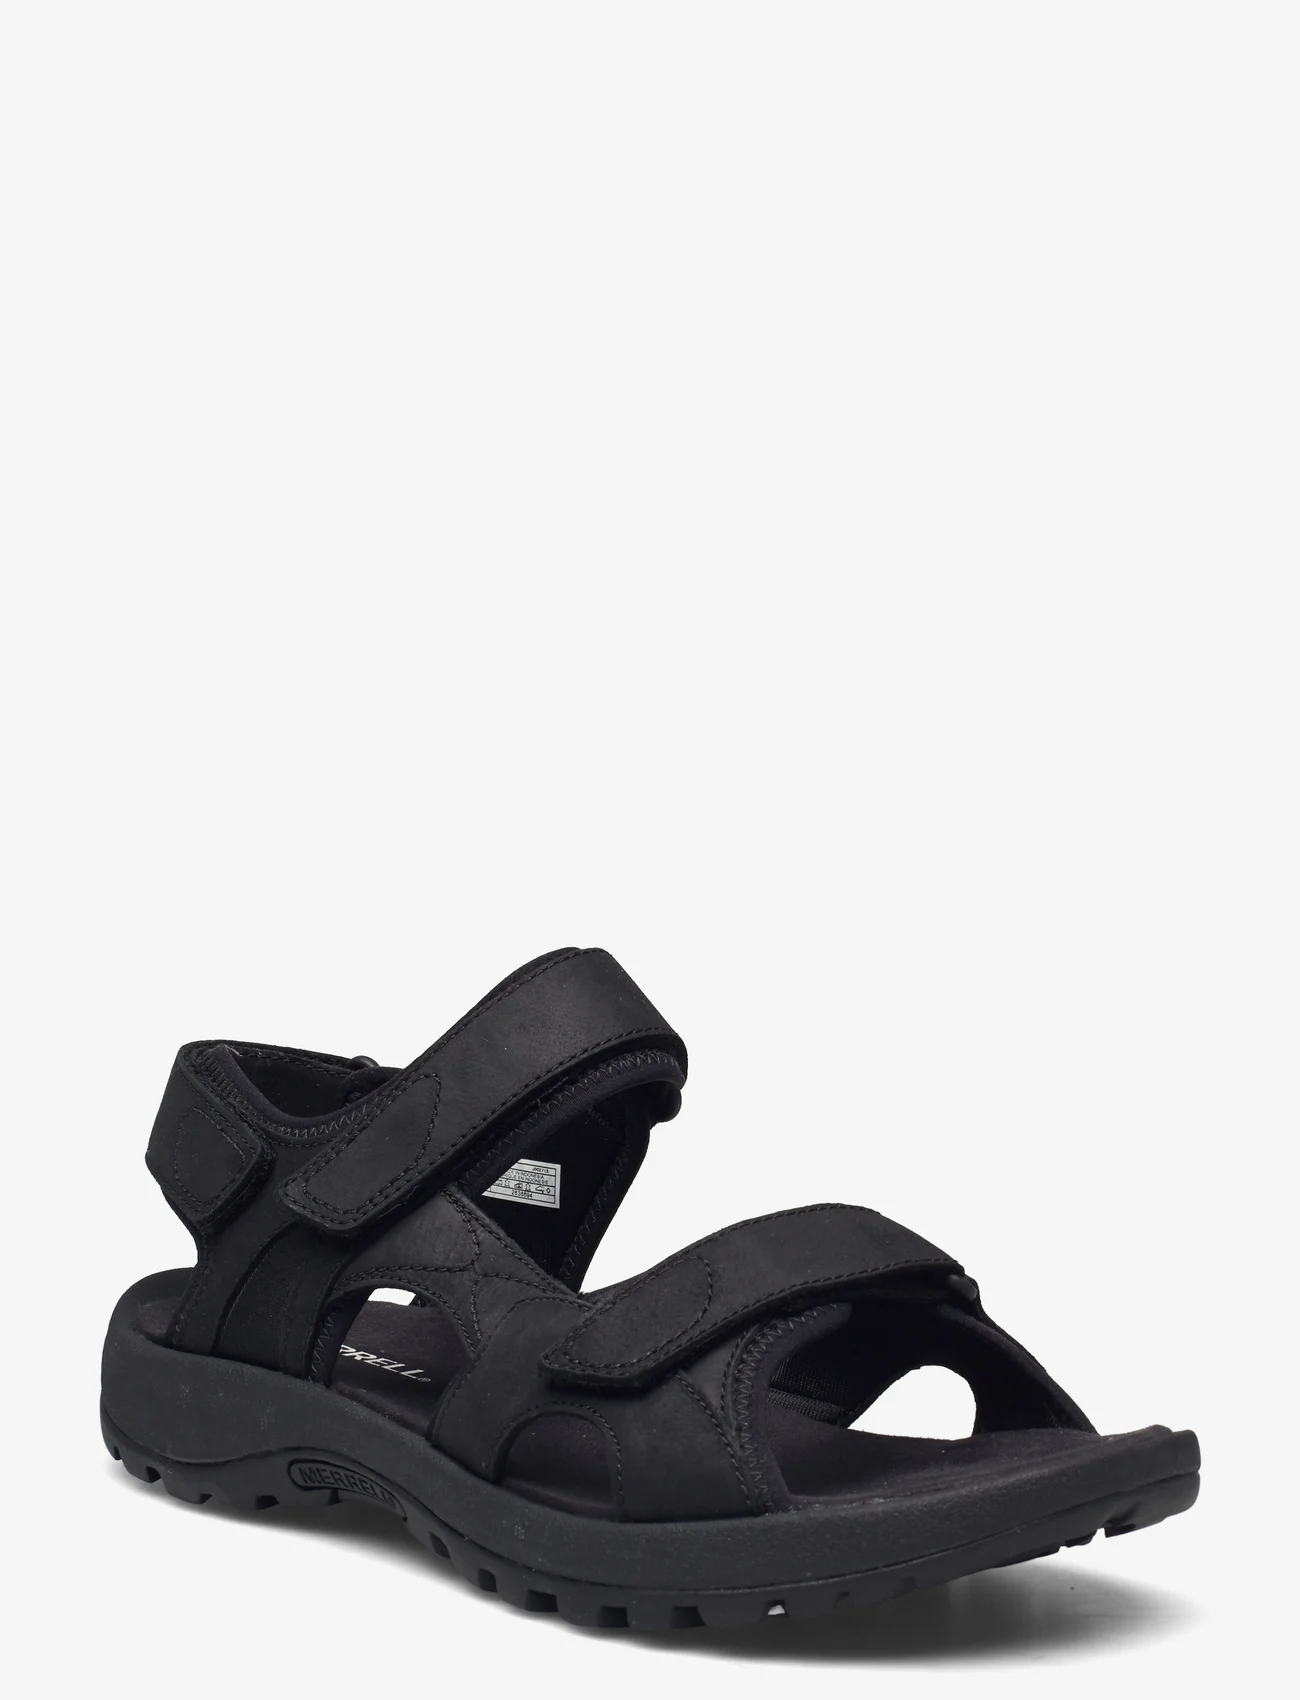 Merrell - Men's Sandspur 2 Convert - Black - hiking sandals - black - 0